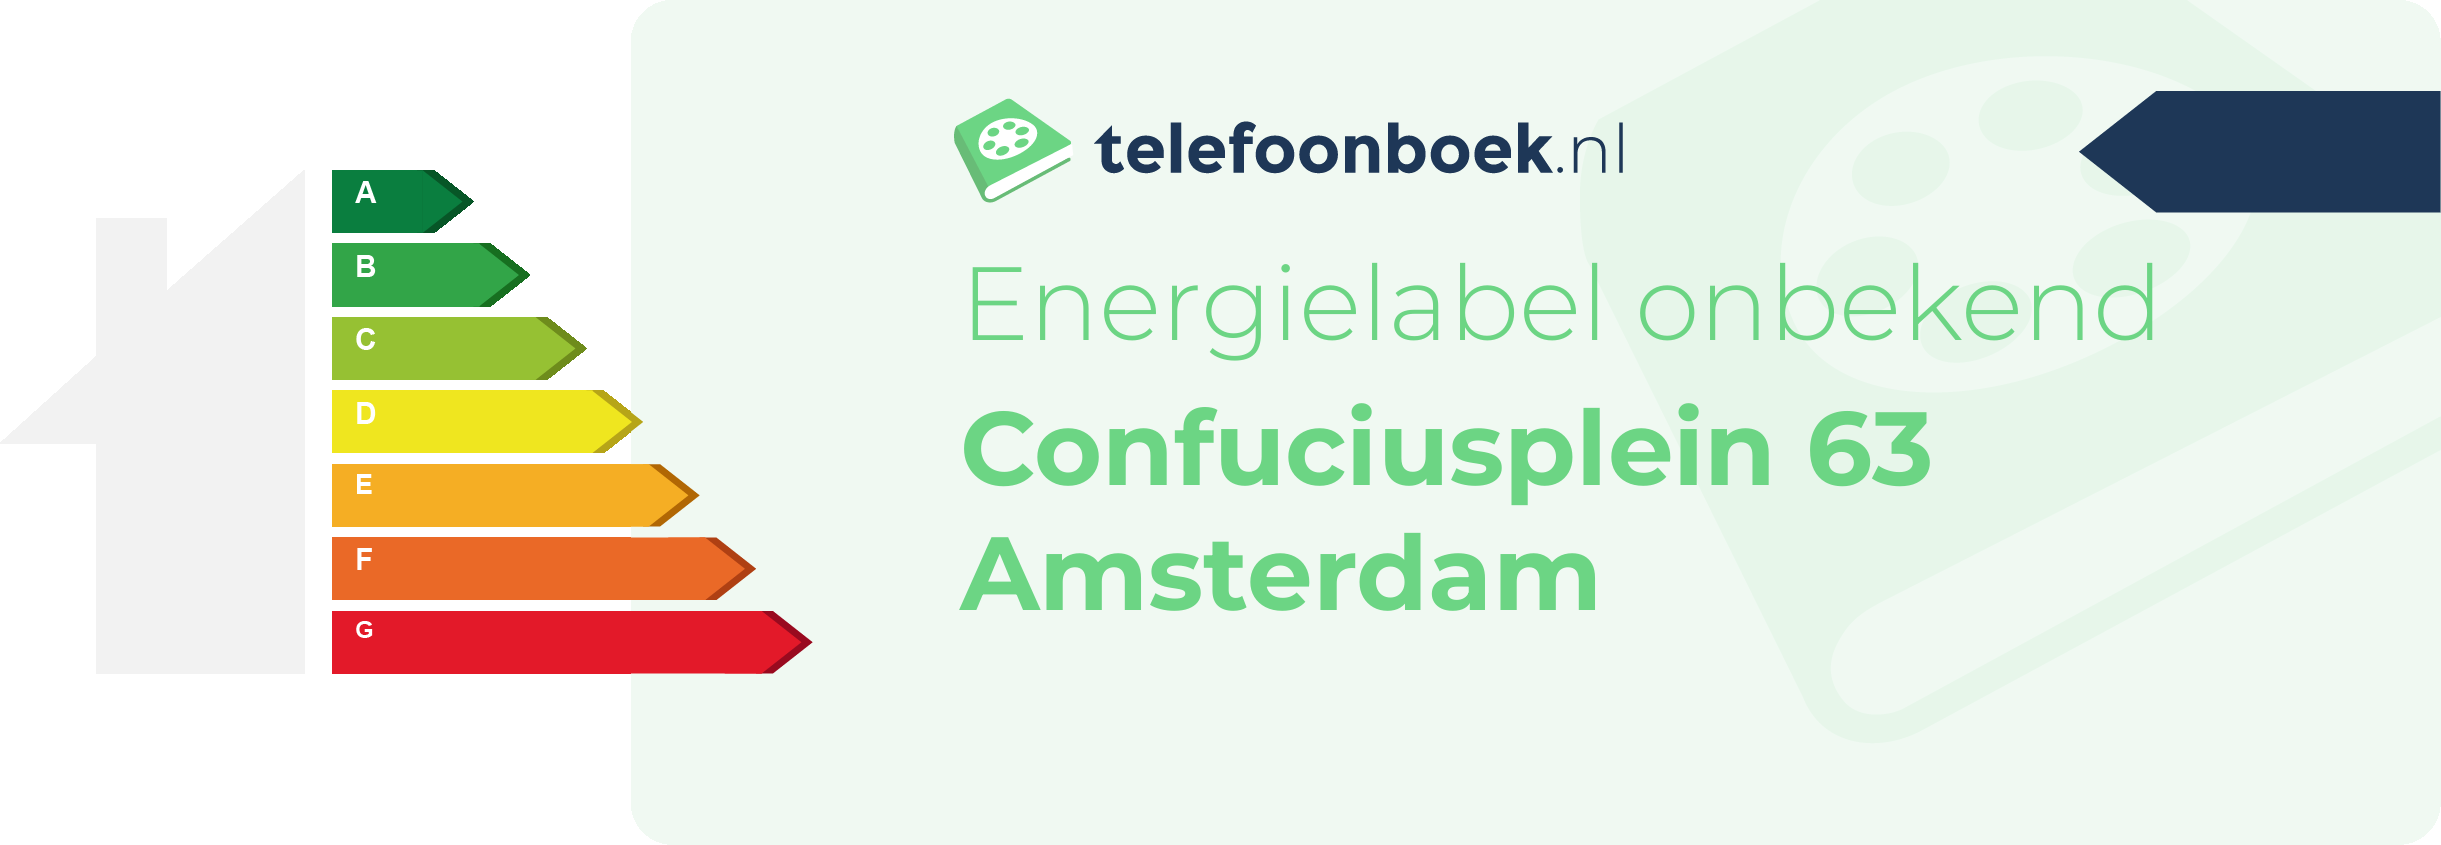 Energielabel Confuciusplein 63 Amsterdam